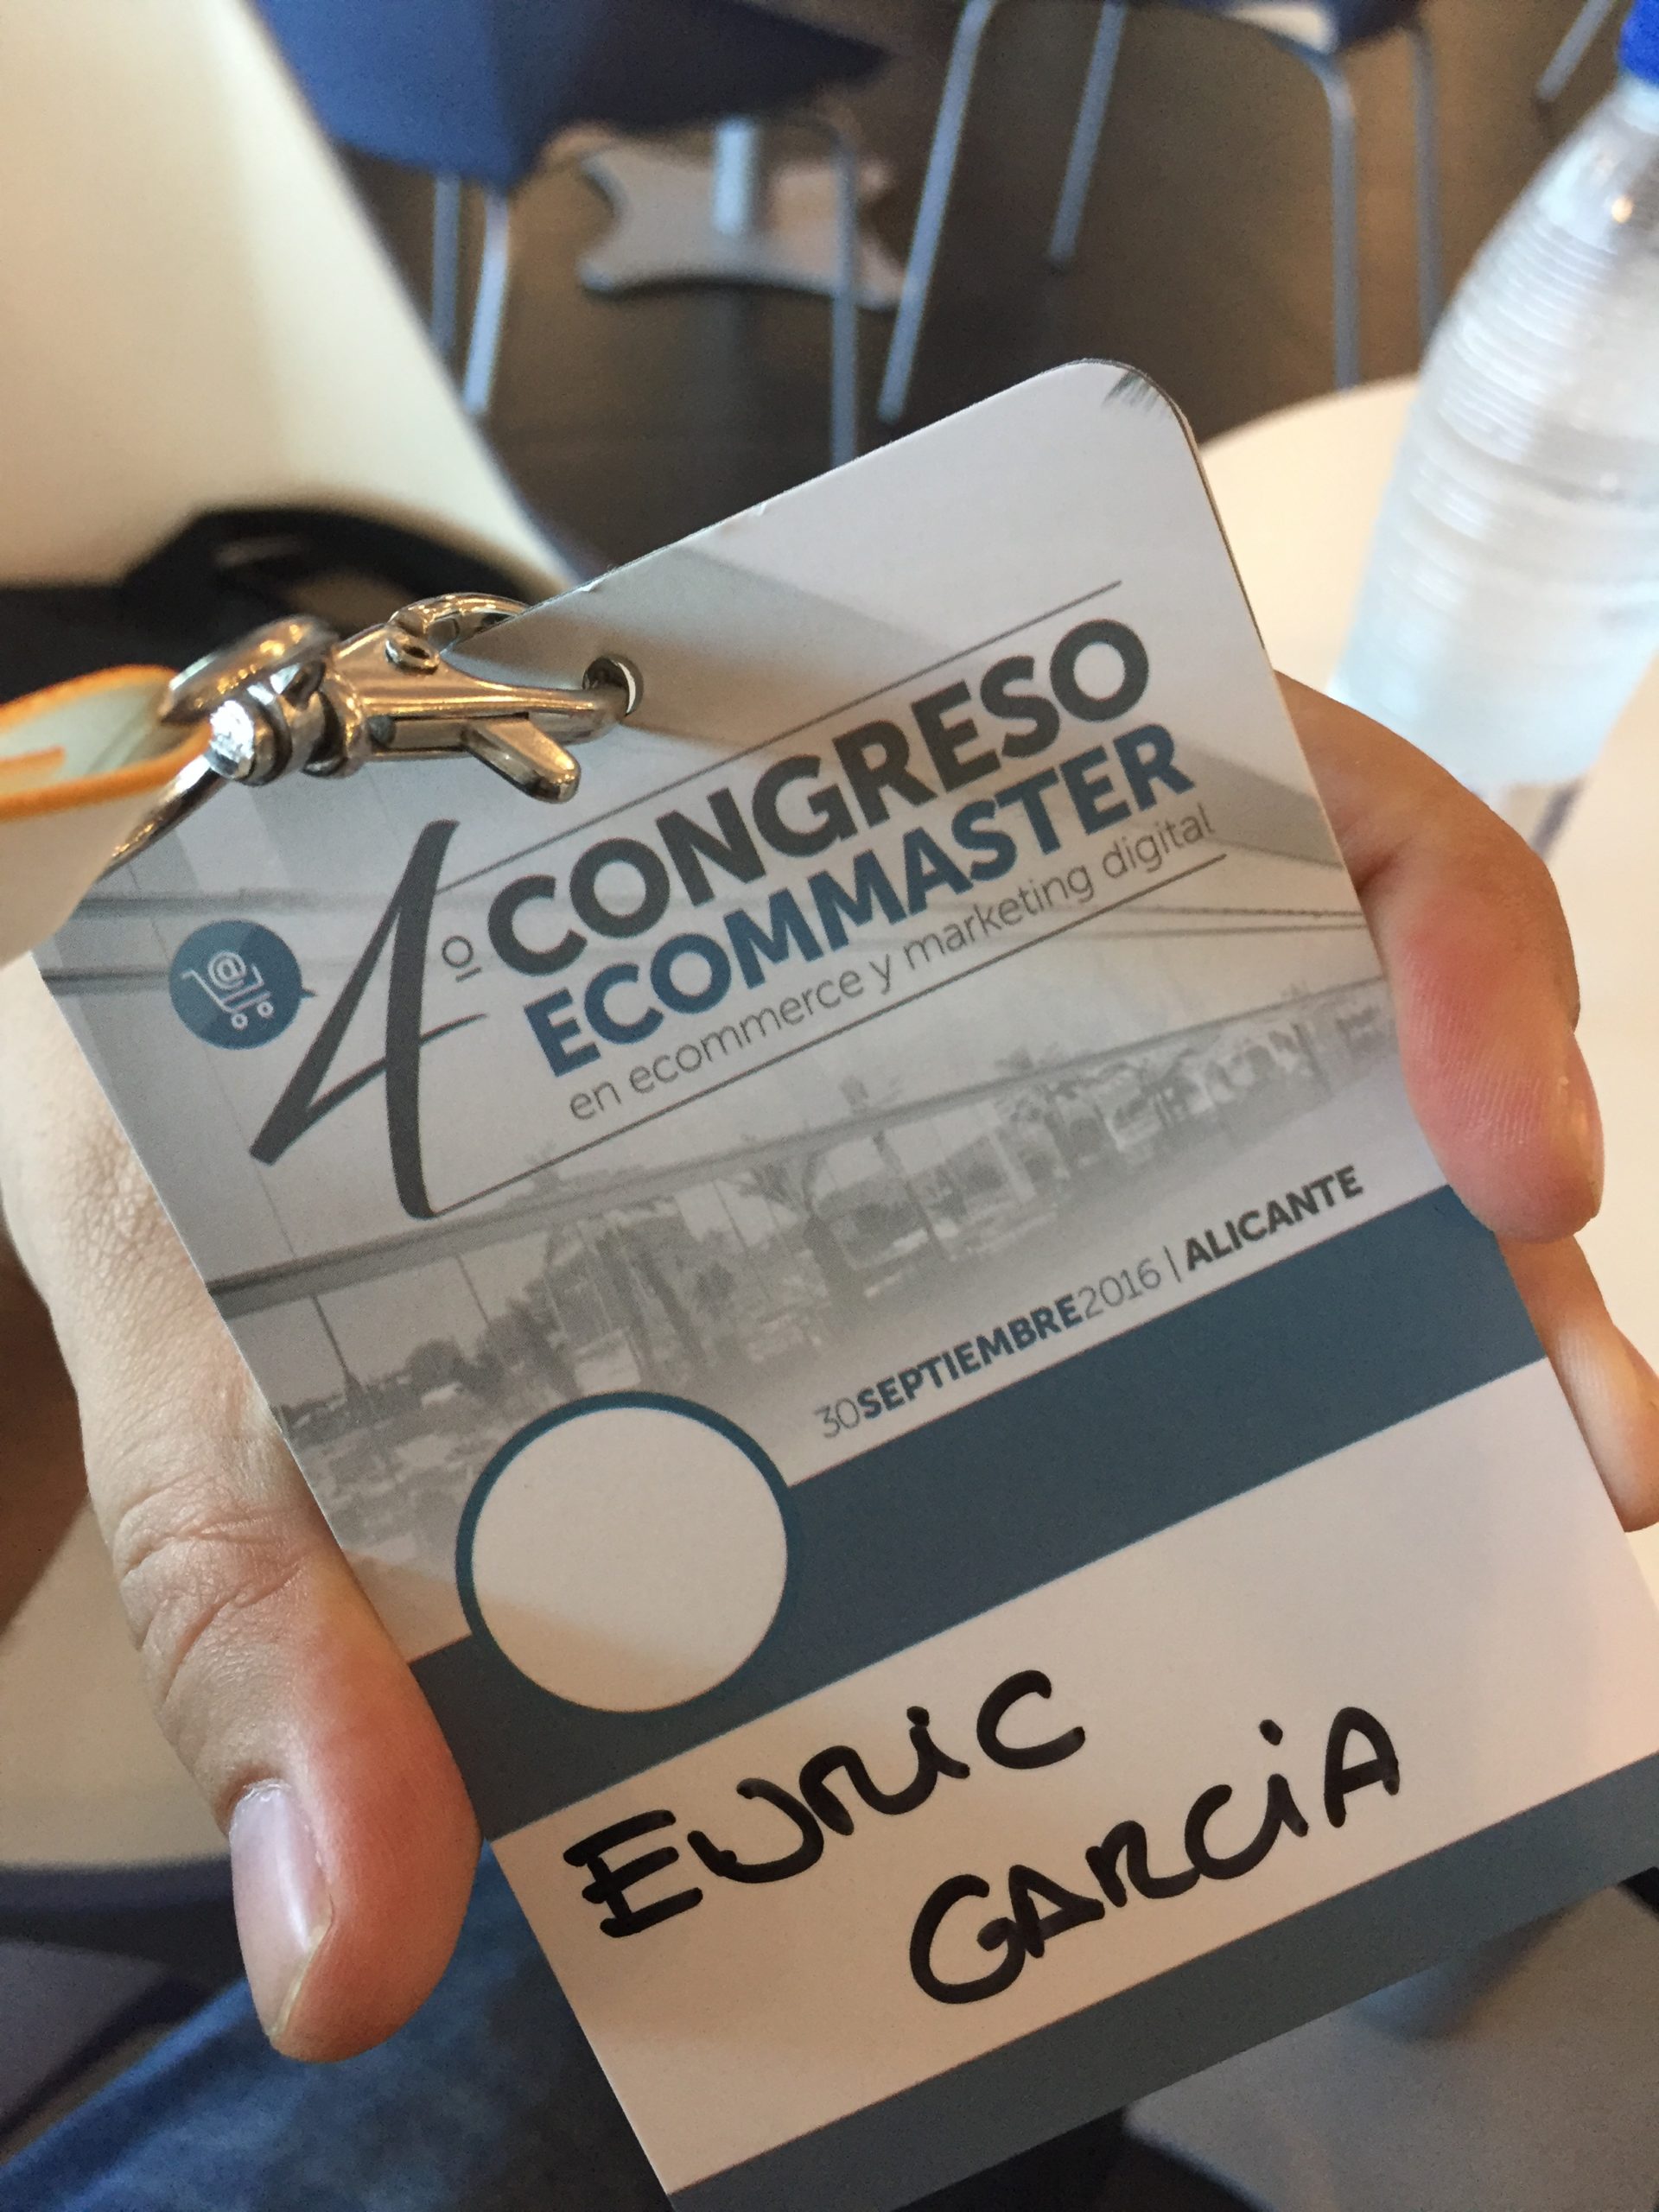 IV Congreso Ecommaster